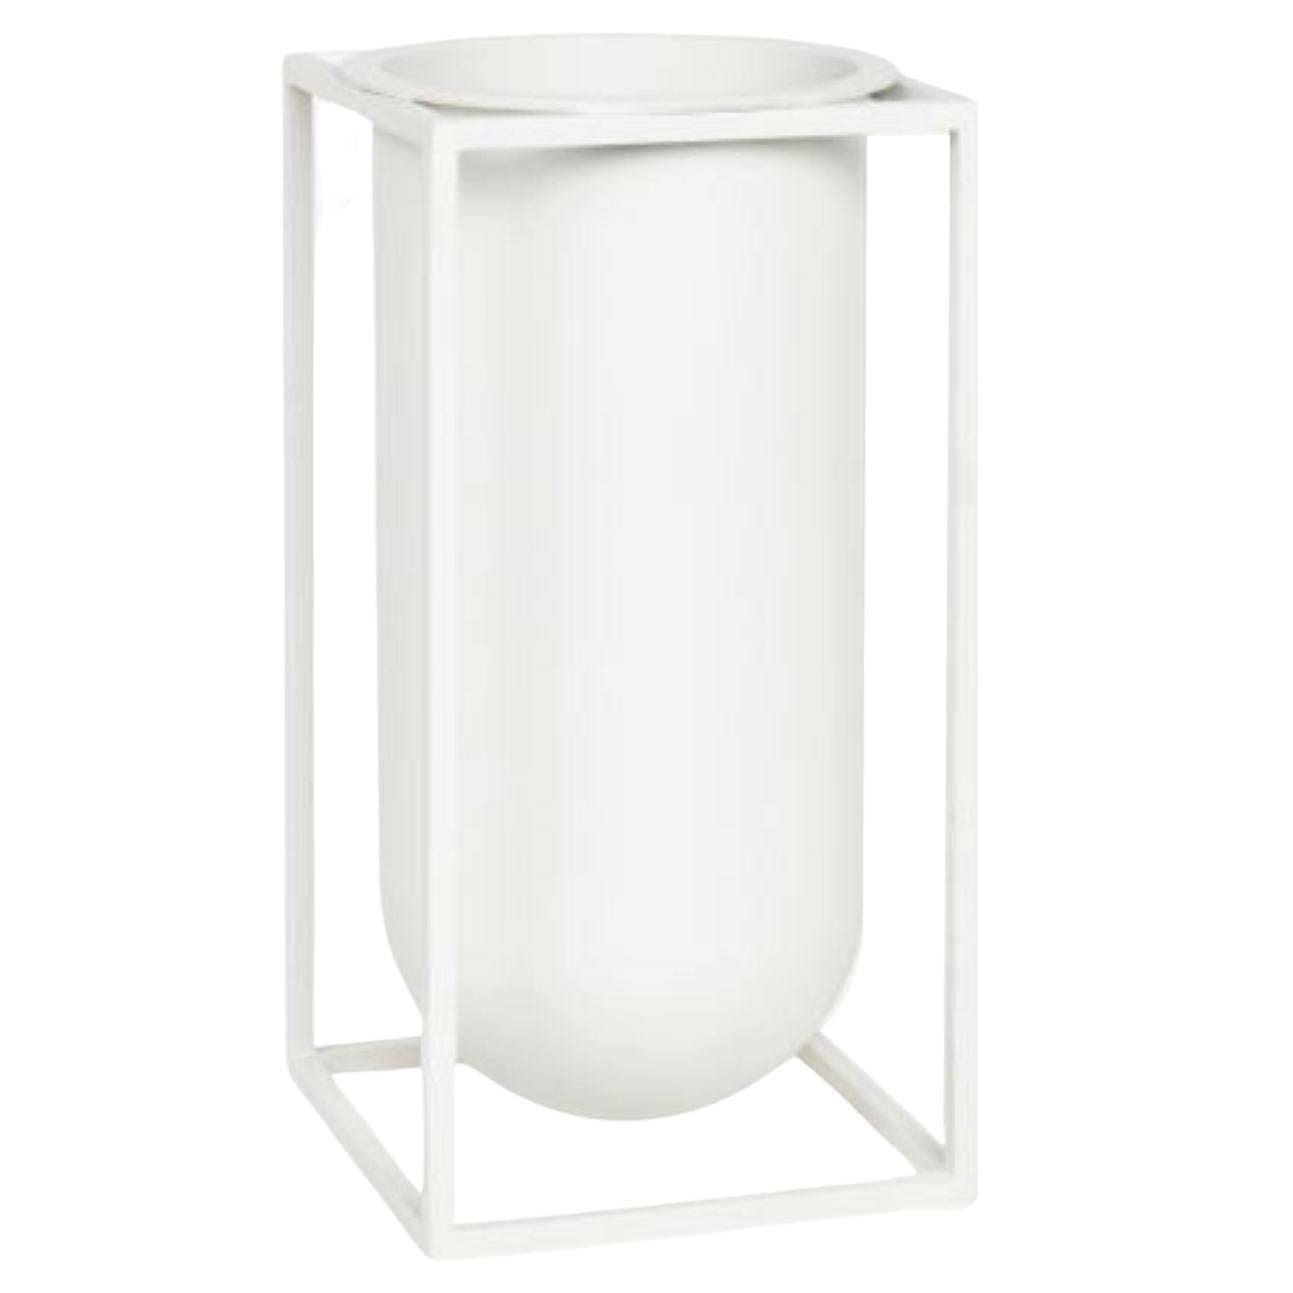 White Lolo Kubus Vase by Lassen For Sale